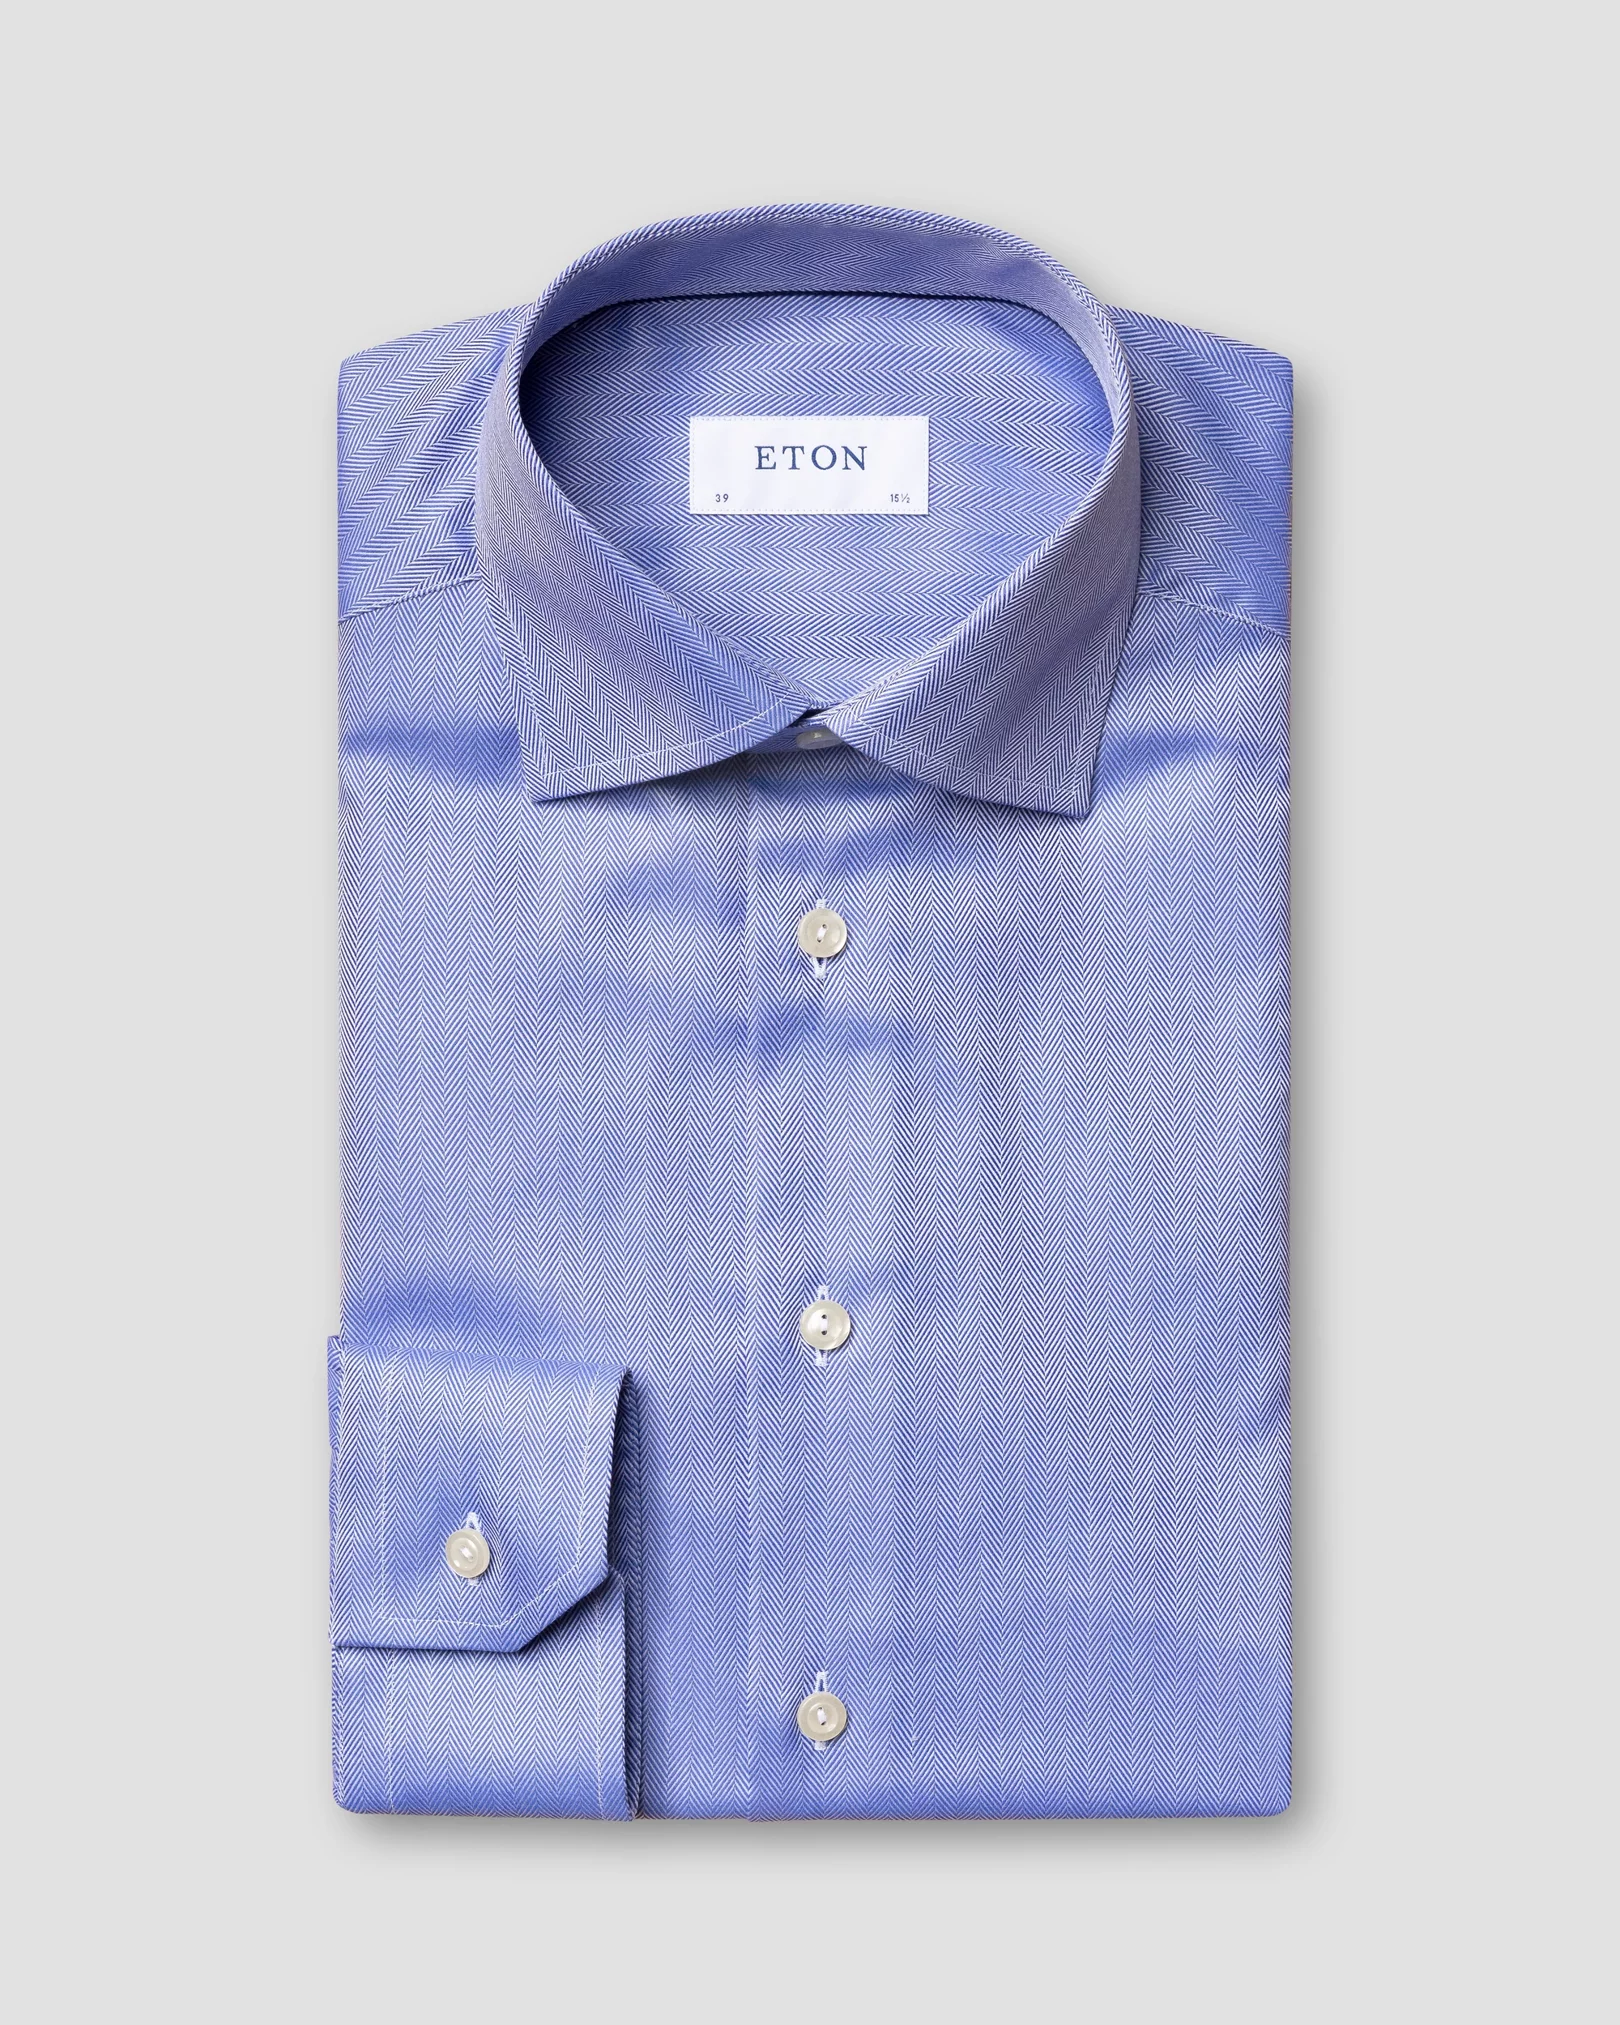 Eton - blue herringbone twill shirt